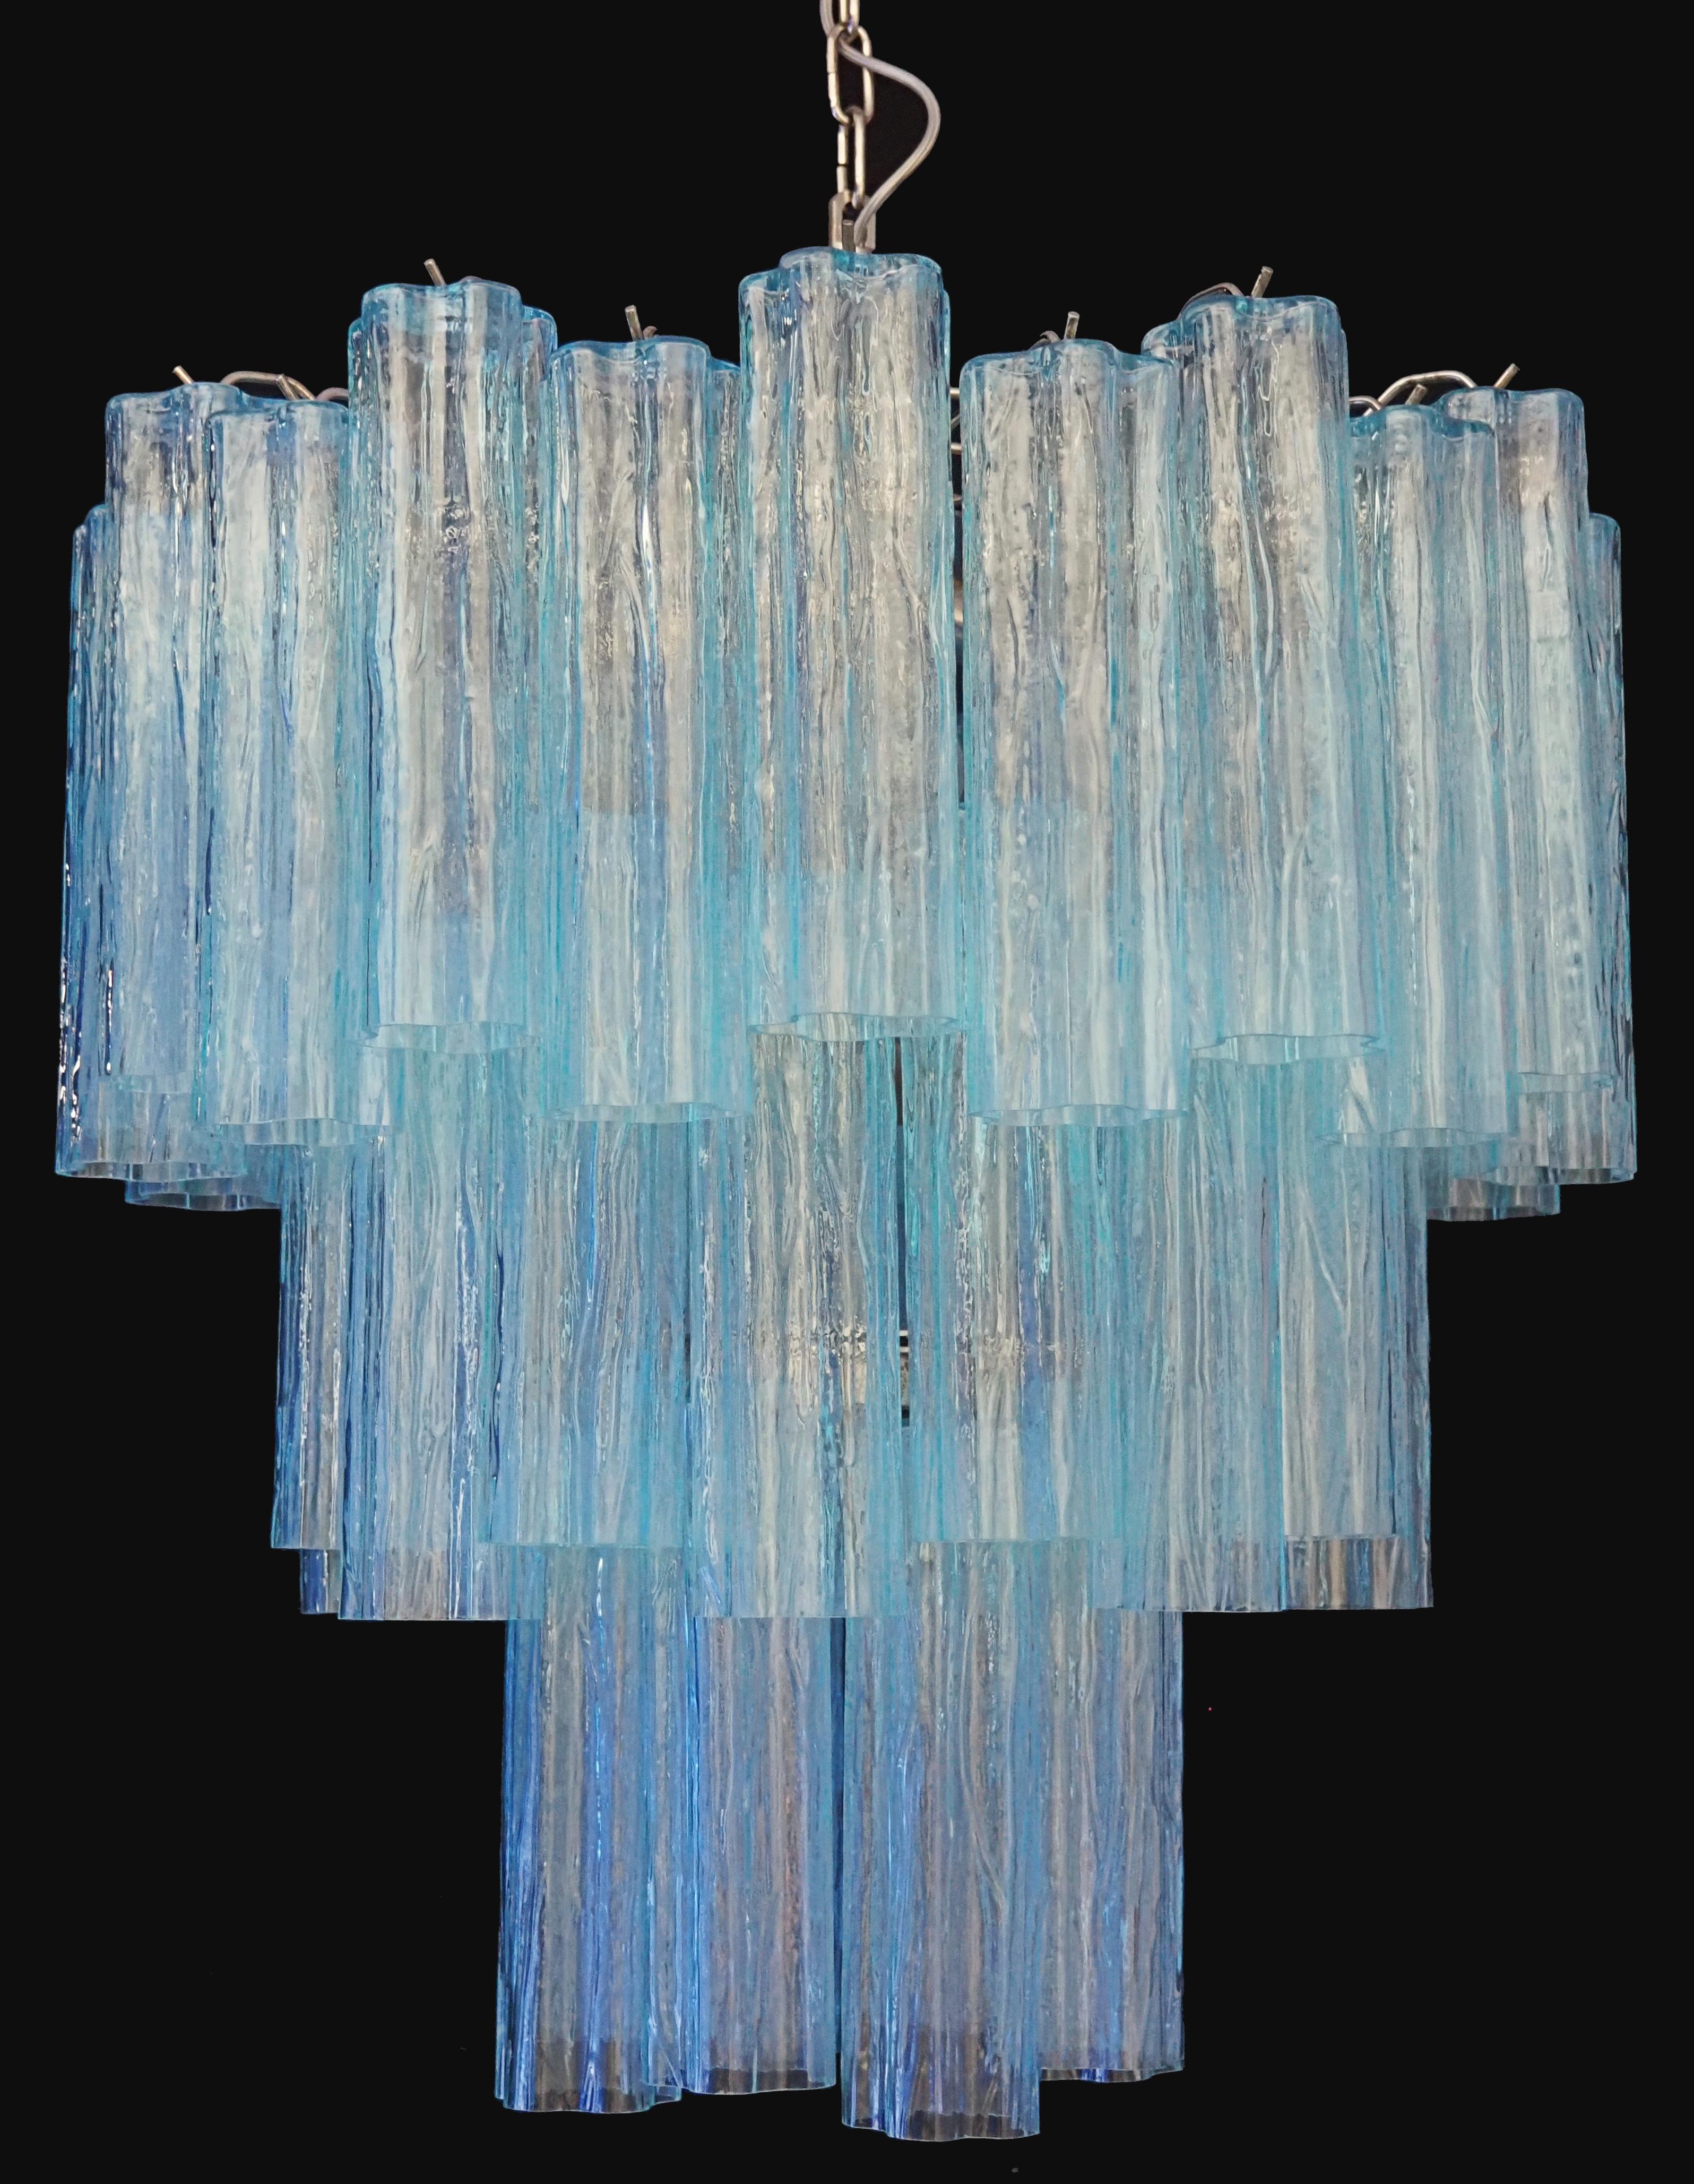 Art Glass Amazing Three-Tier Murano Glass Tube Chandelier - 48 BLUE GLASSES  For Sale